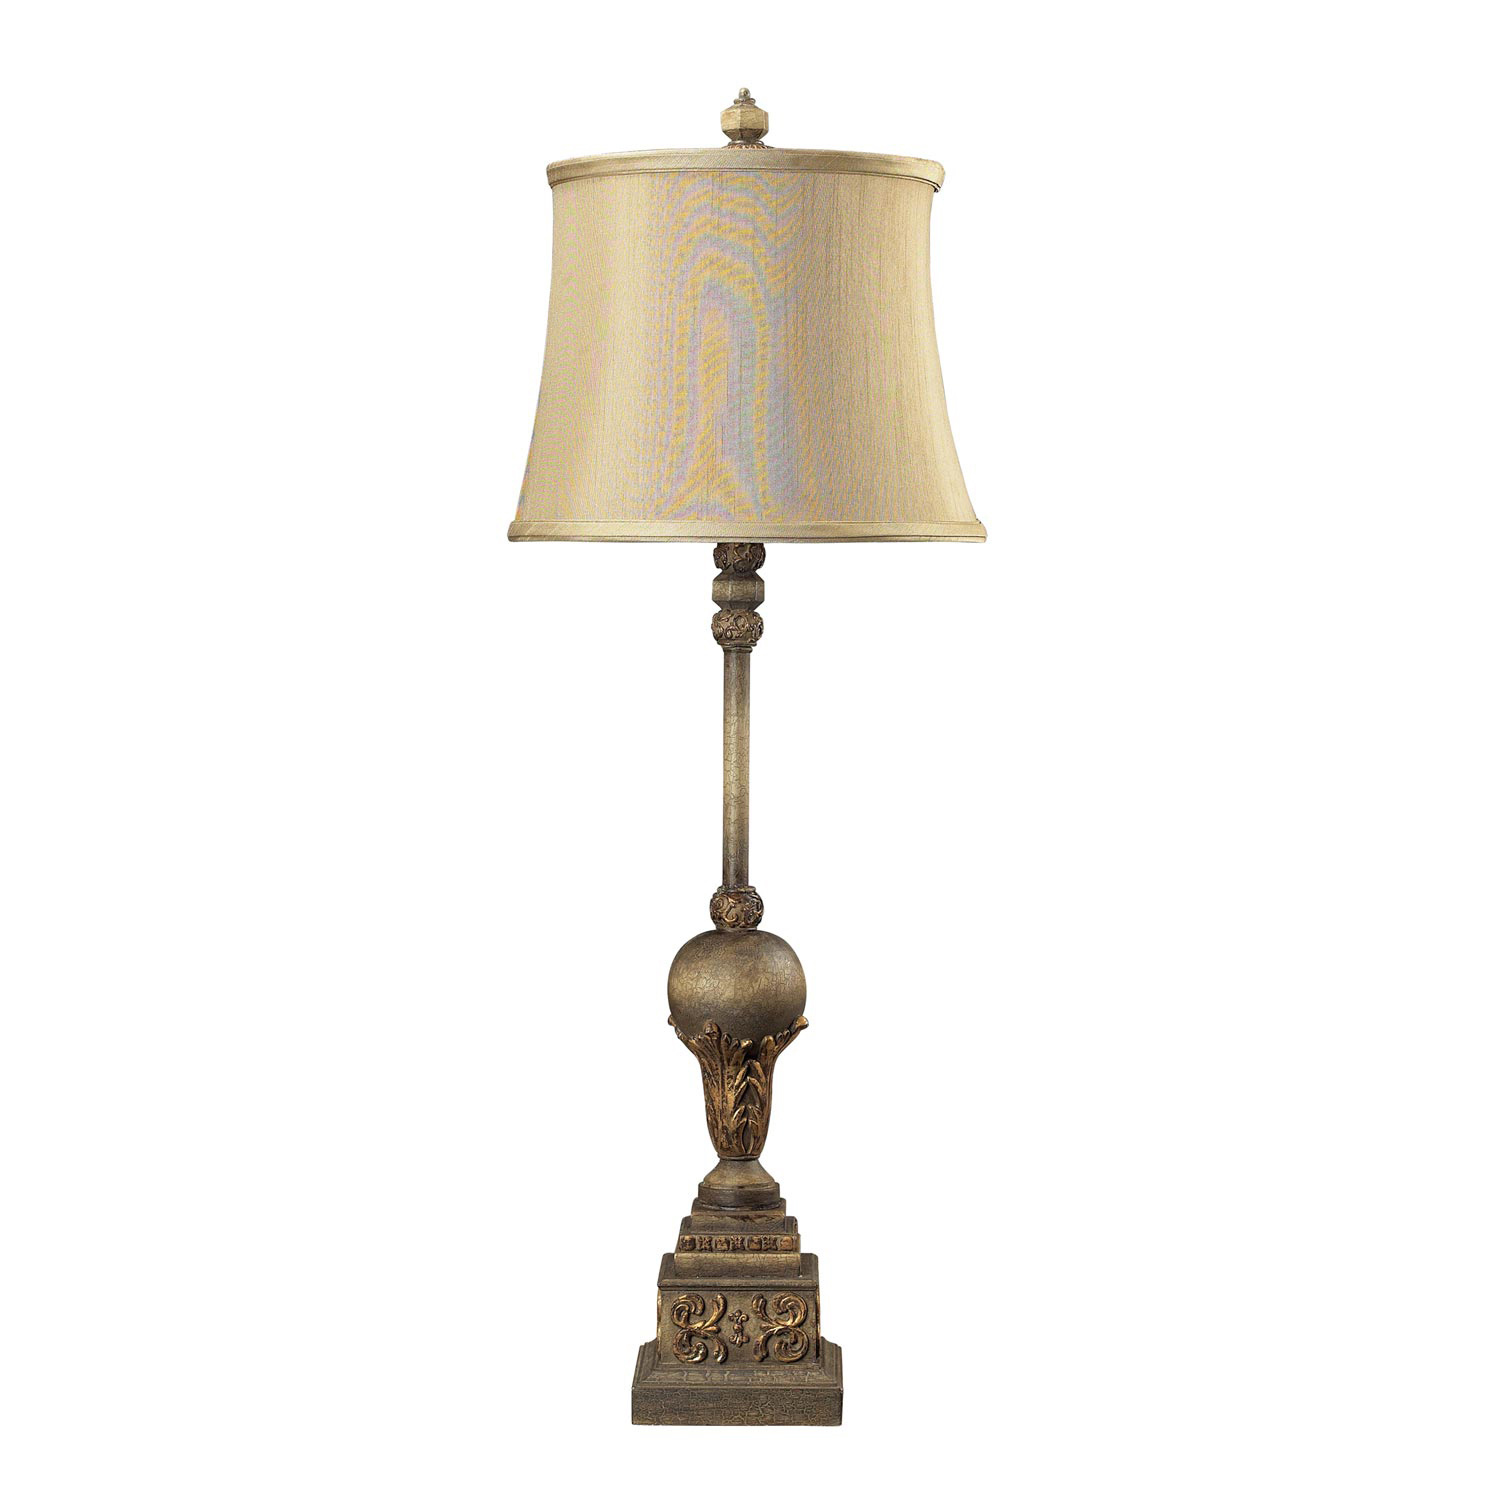 Elk Lighting 93-19266 Veylon Buffet Lamp - Sussex Stone with Gold